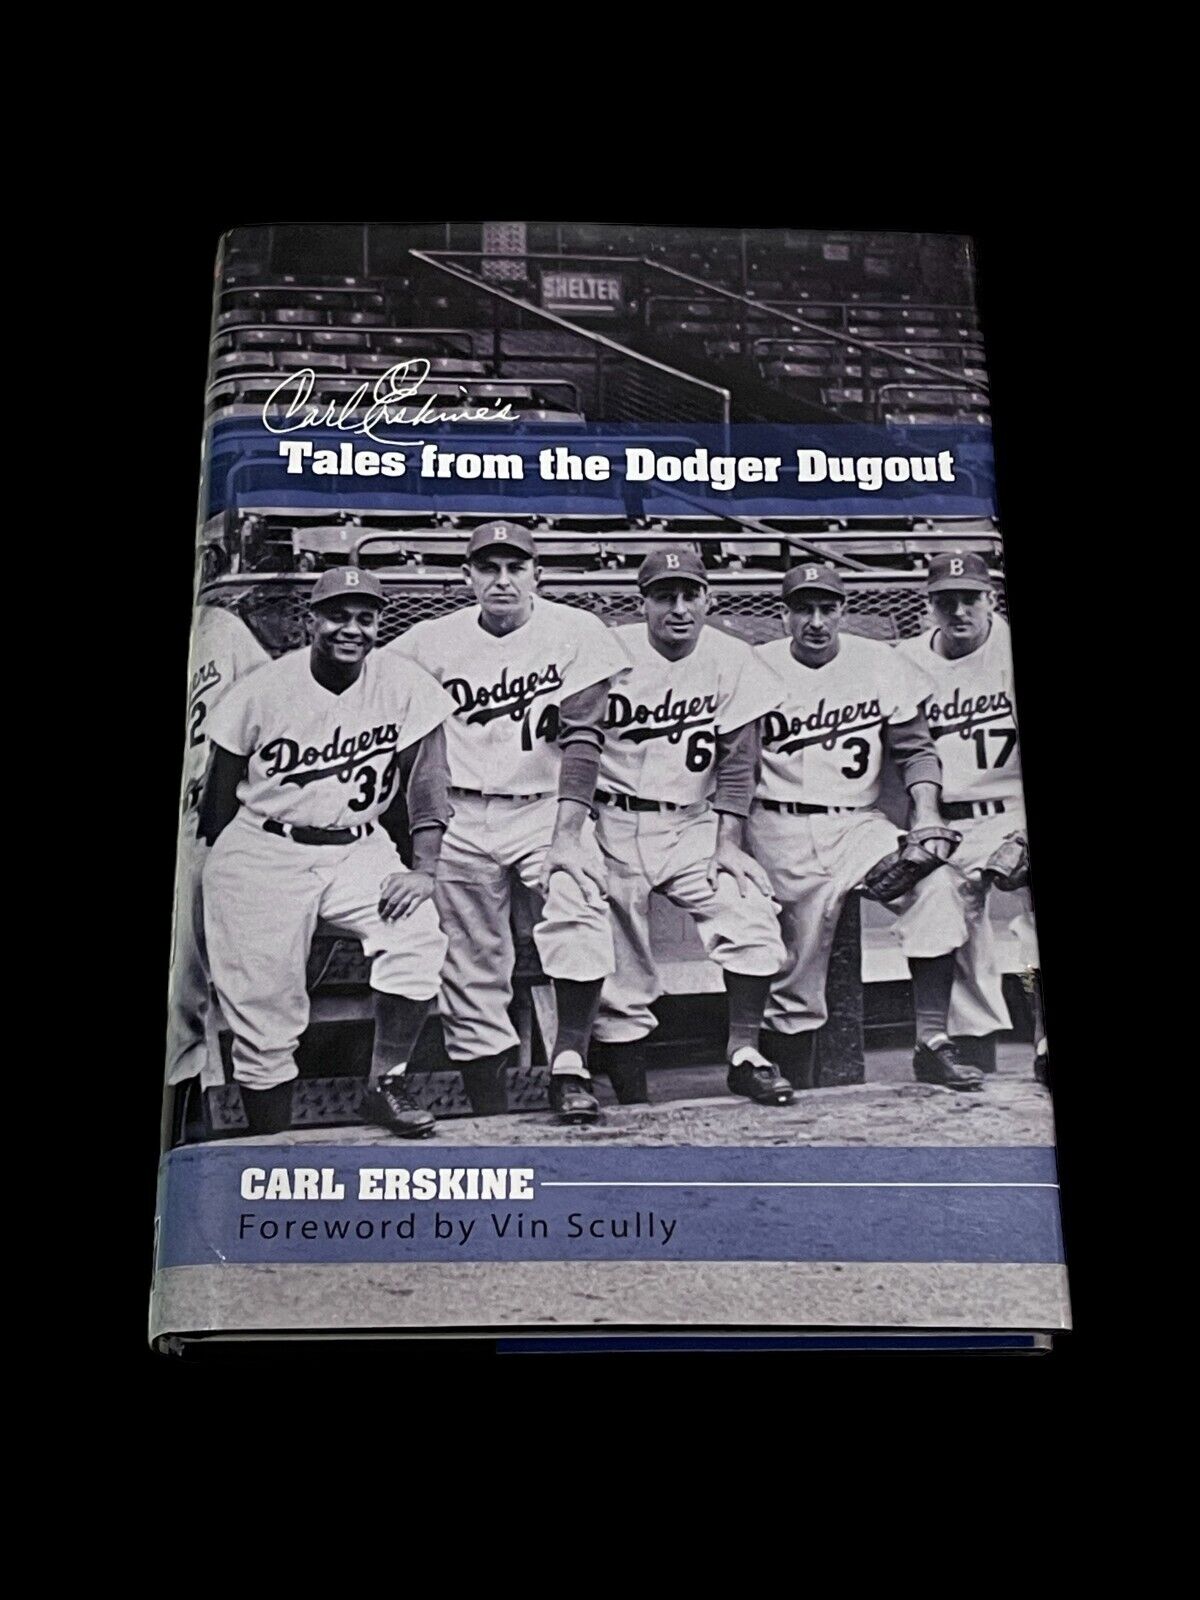 Carl Erskine Brooklyn LA Los Angeles Dodgers World Series Signed Autograph Book